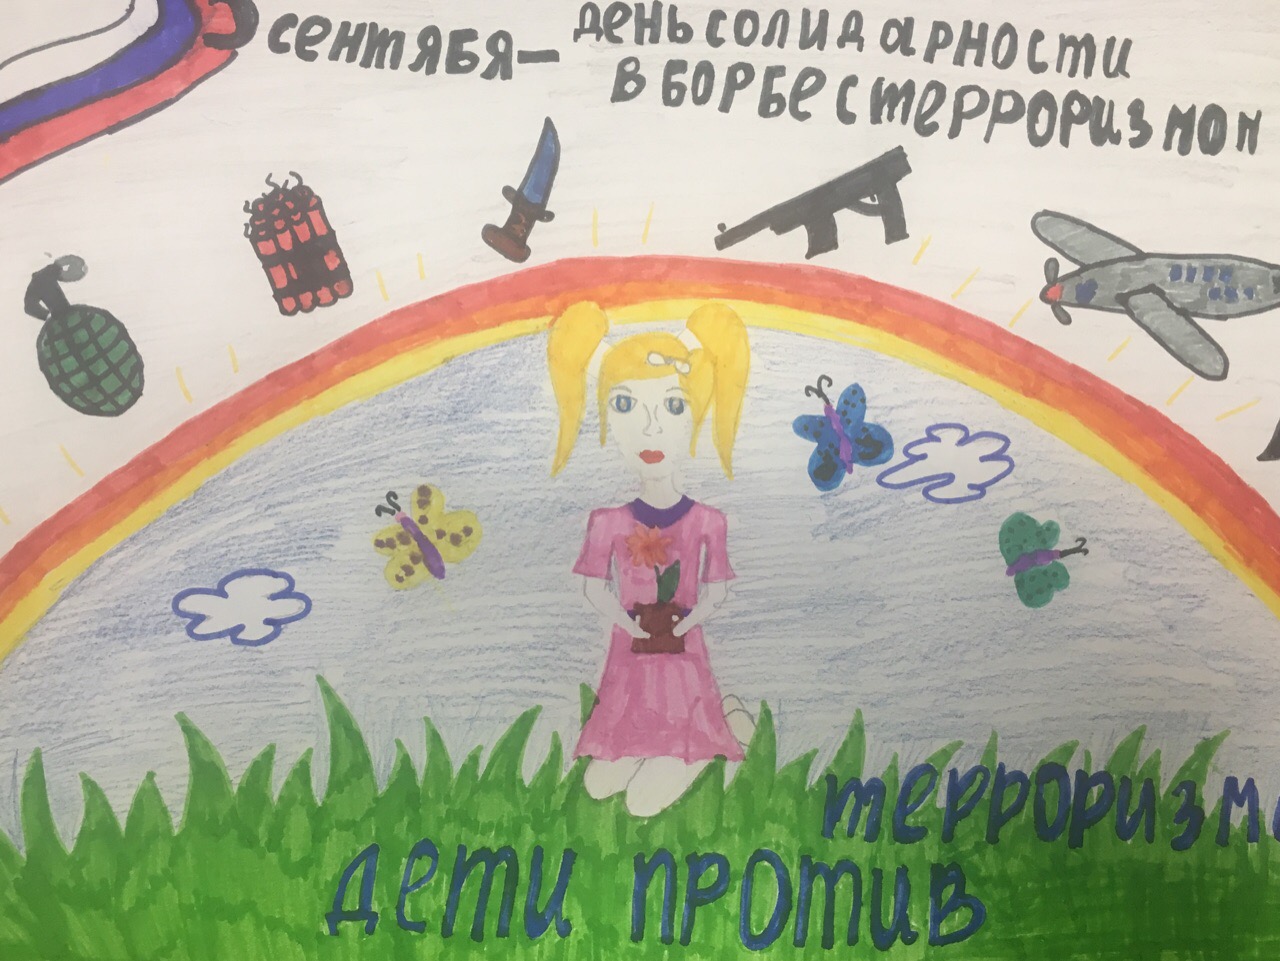 Рисунок на конкурс дети против терроризма